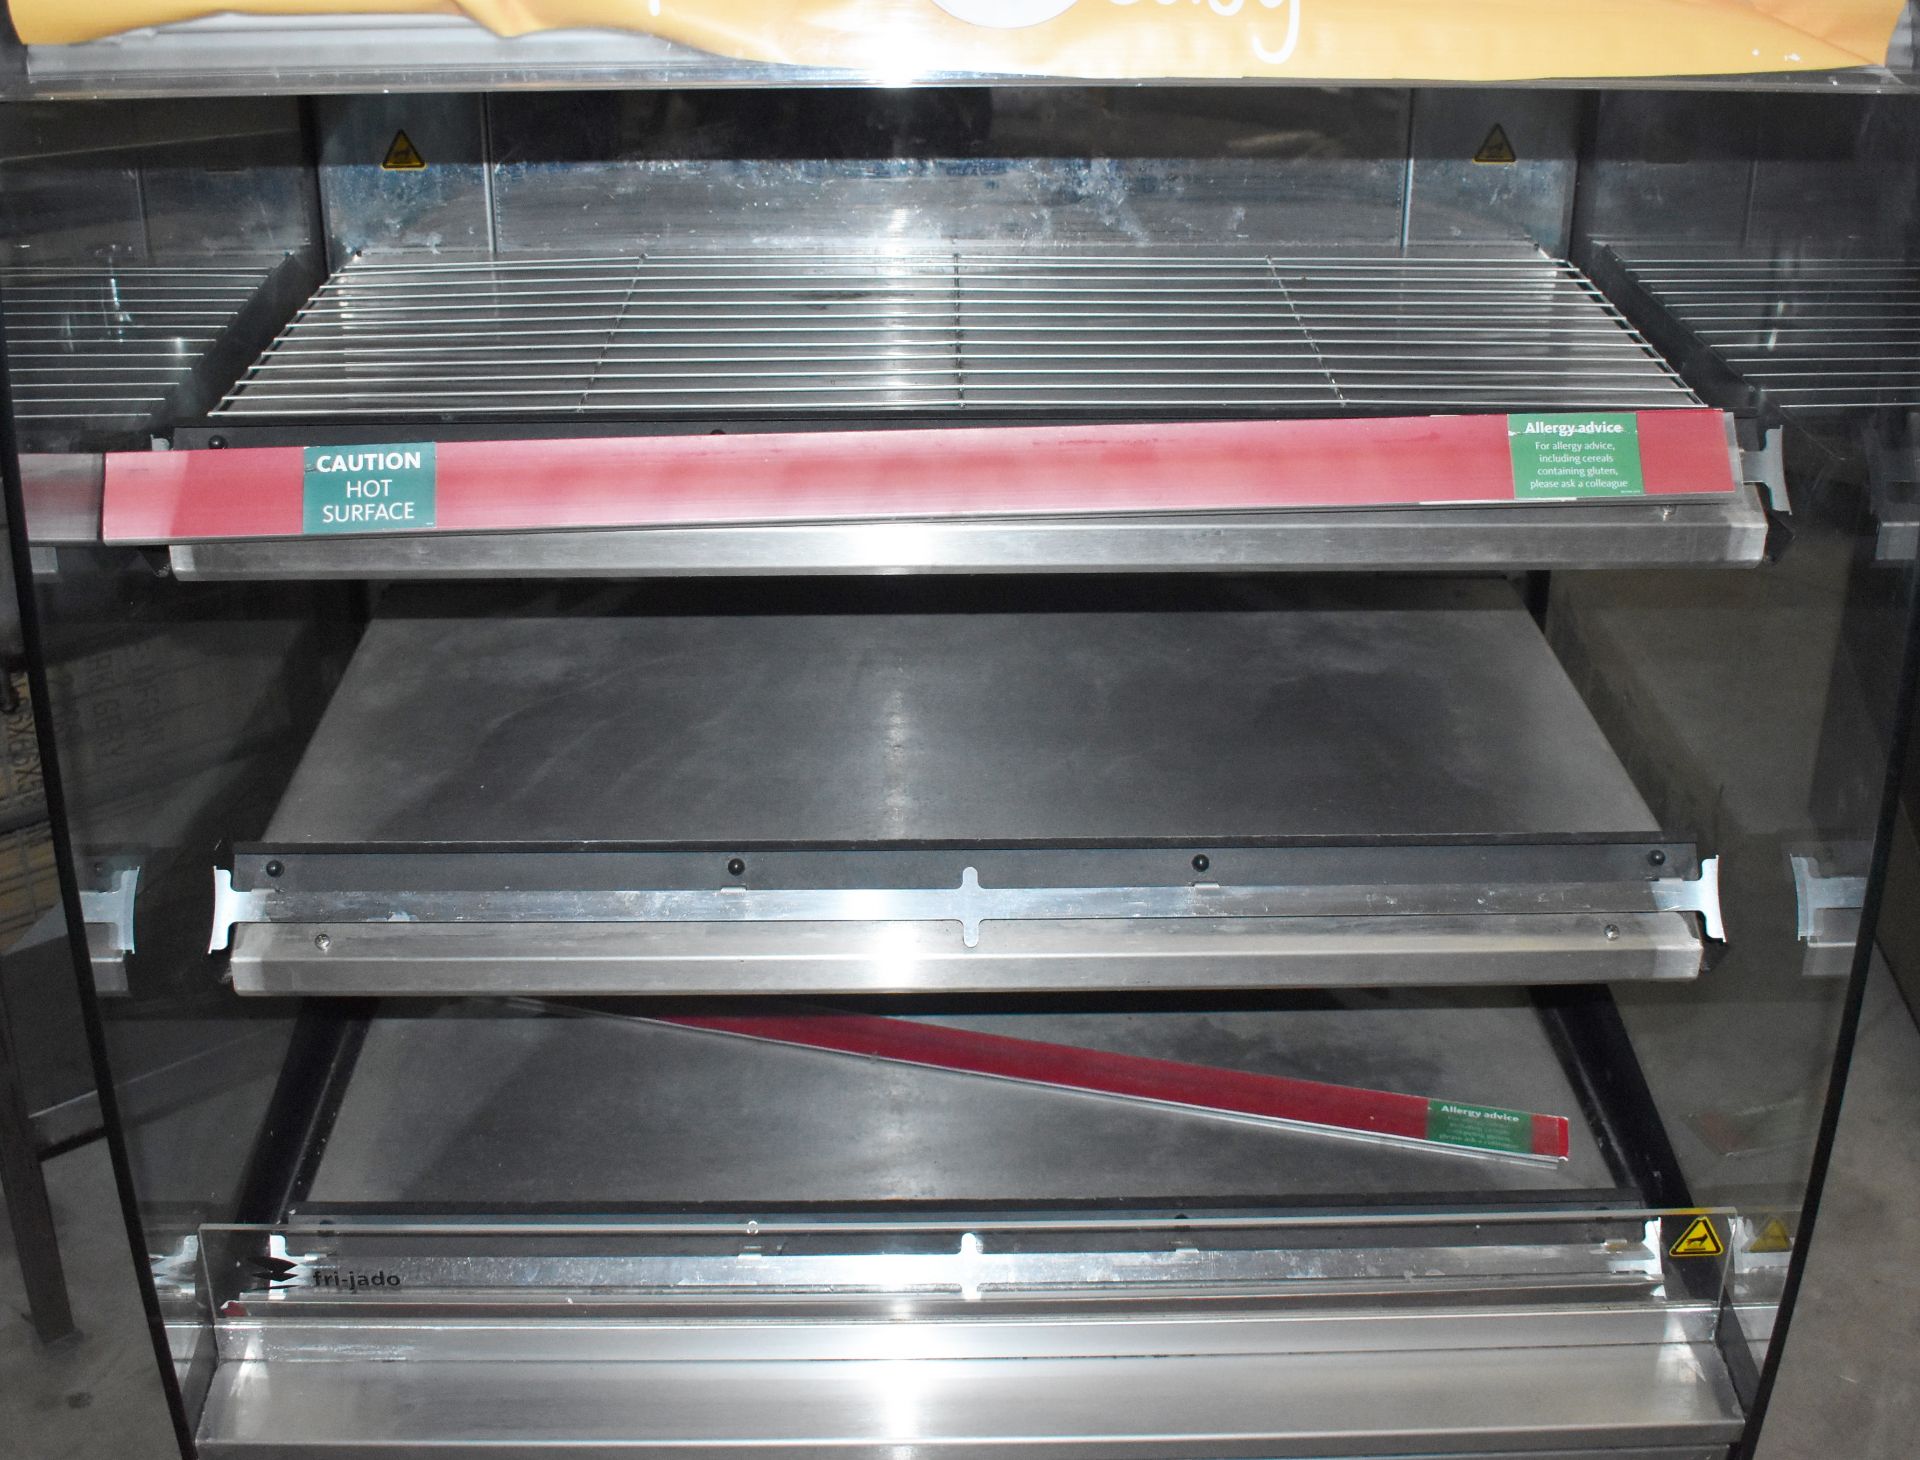 1 x Fri-Jado Three Tier Multi Deck Hot Food Warmer Heated Display Unit - Contemporary Modern - Image 9 of 9